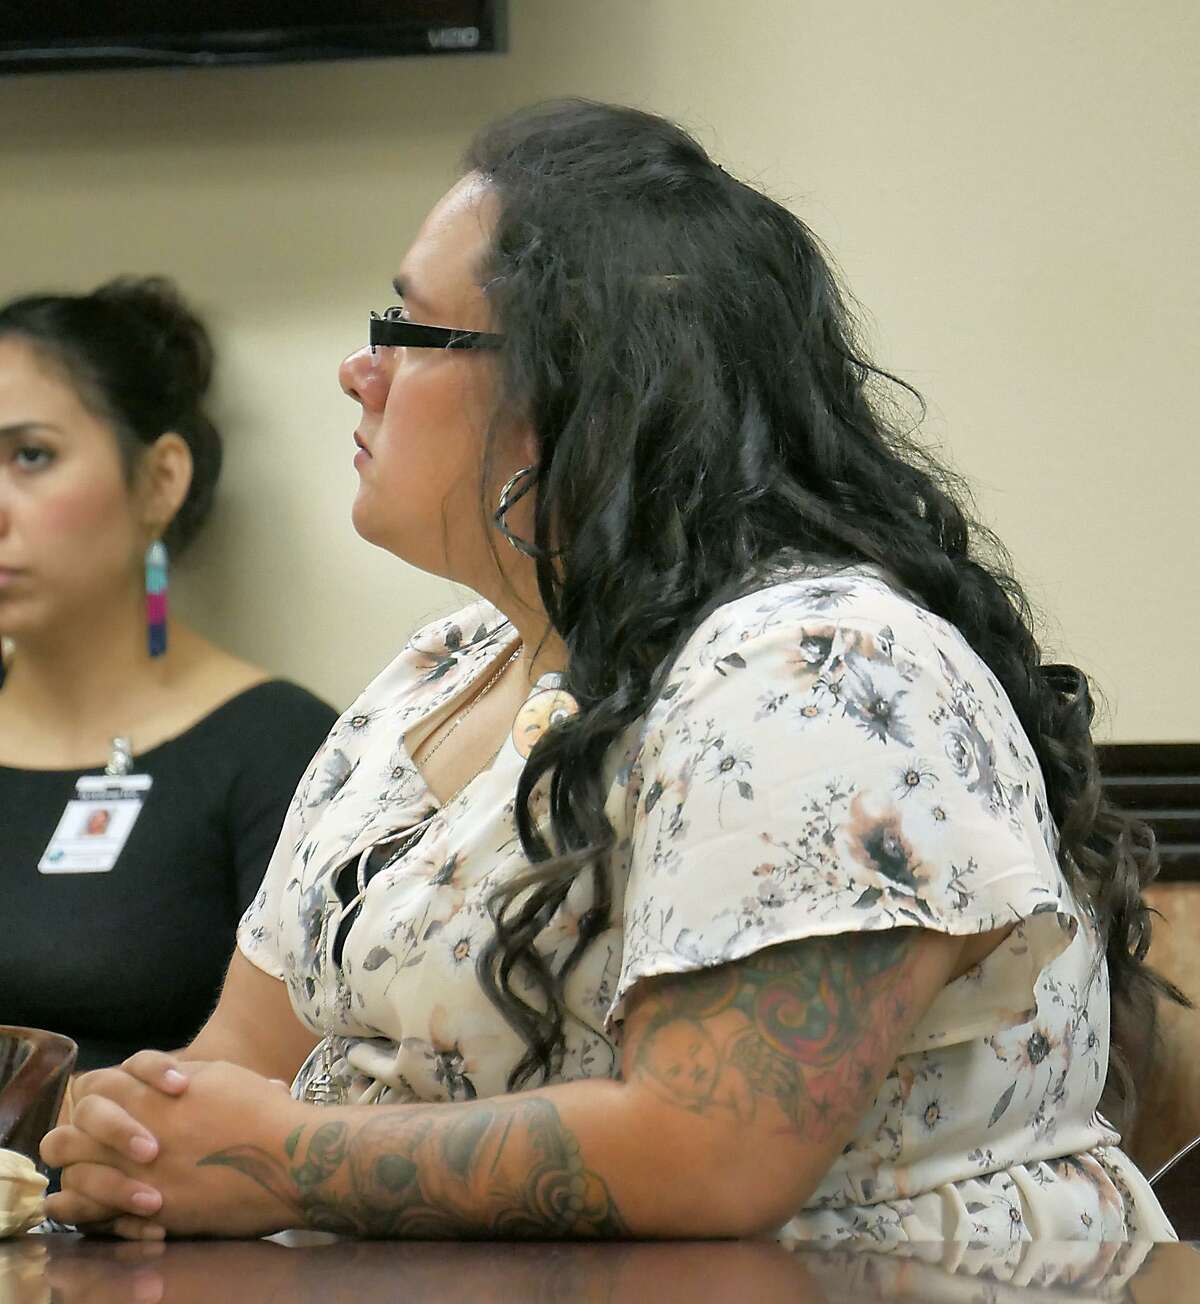 Priscilla "La Gordiloca" Villarreal is pictured at a hearing Wednesday in the 111th District Court.